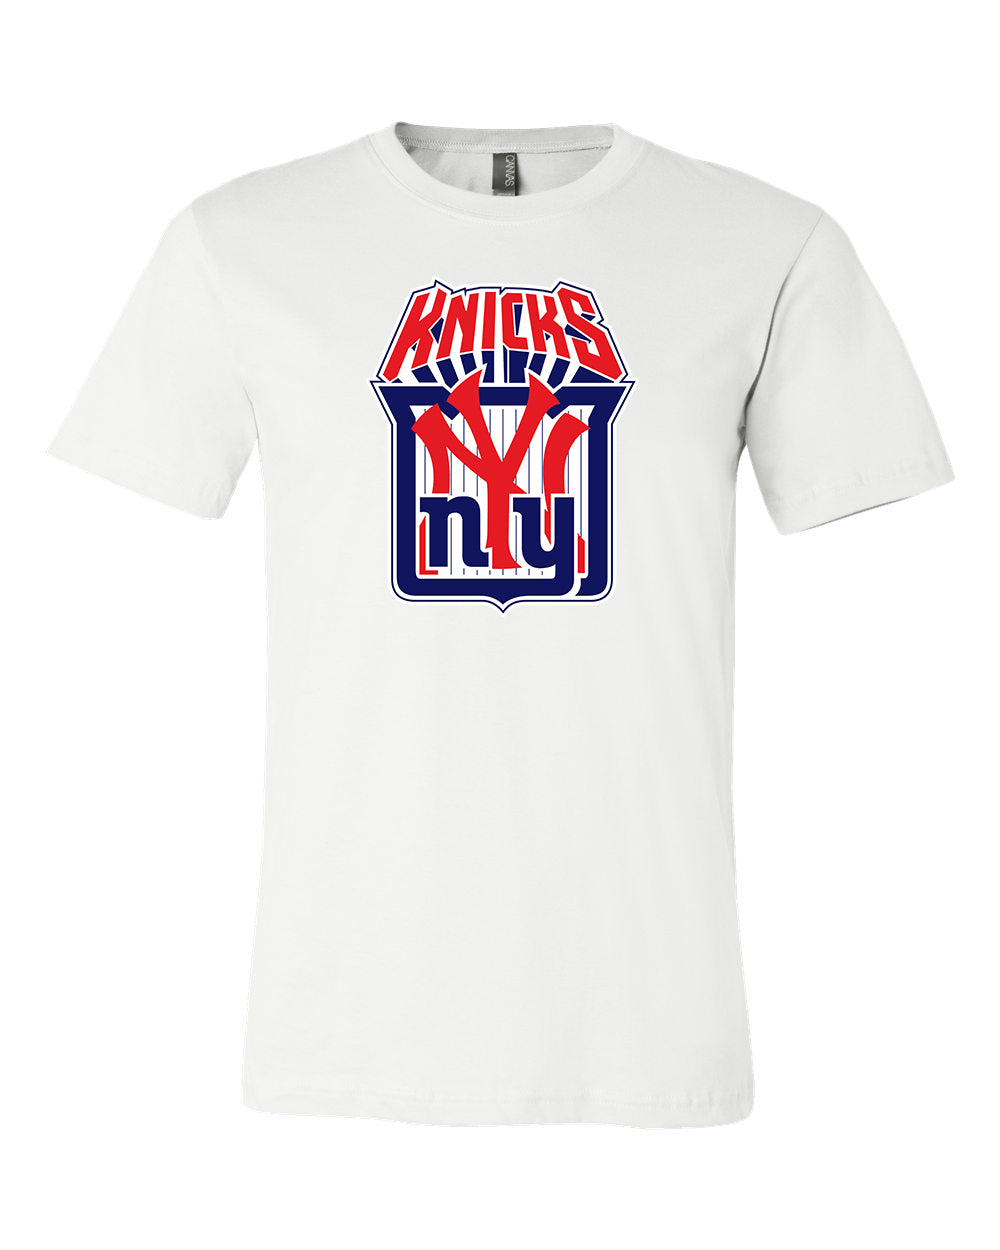 New York Yankees Athletics Tee Shirt